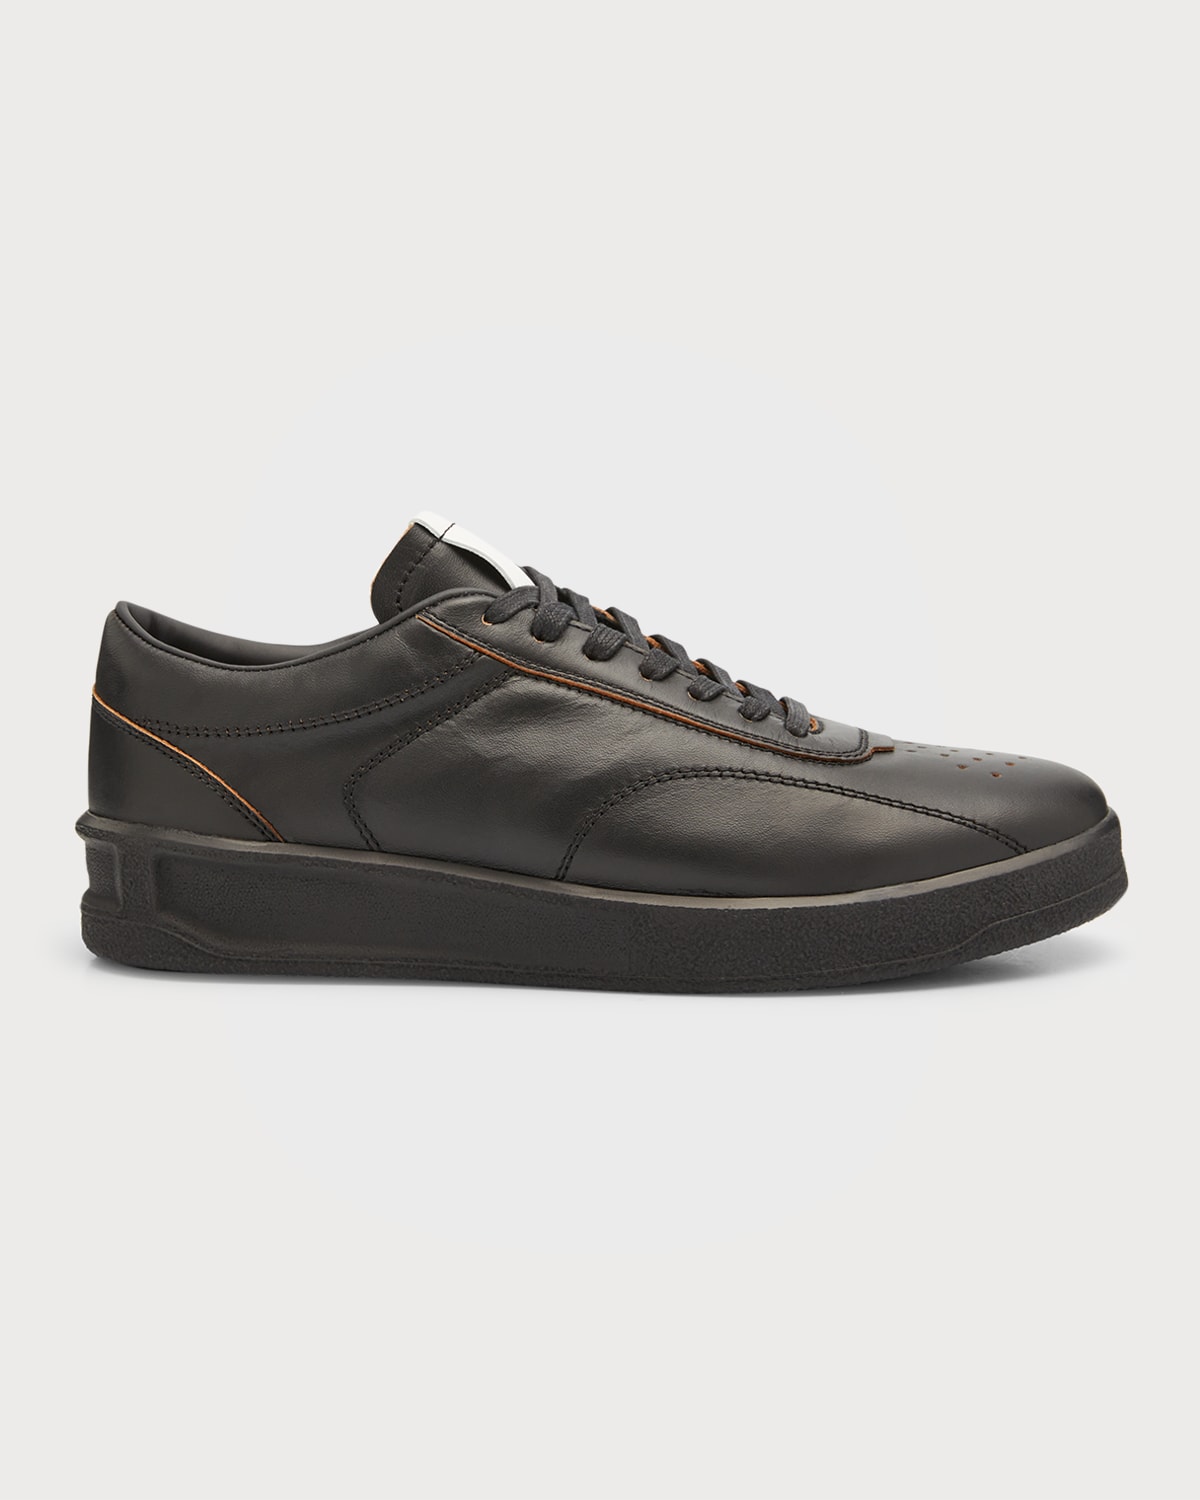 Jil Sander Men's Leather Low-Top Sneakers